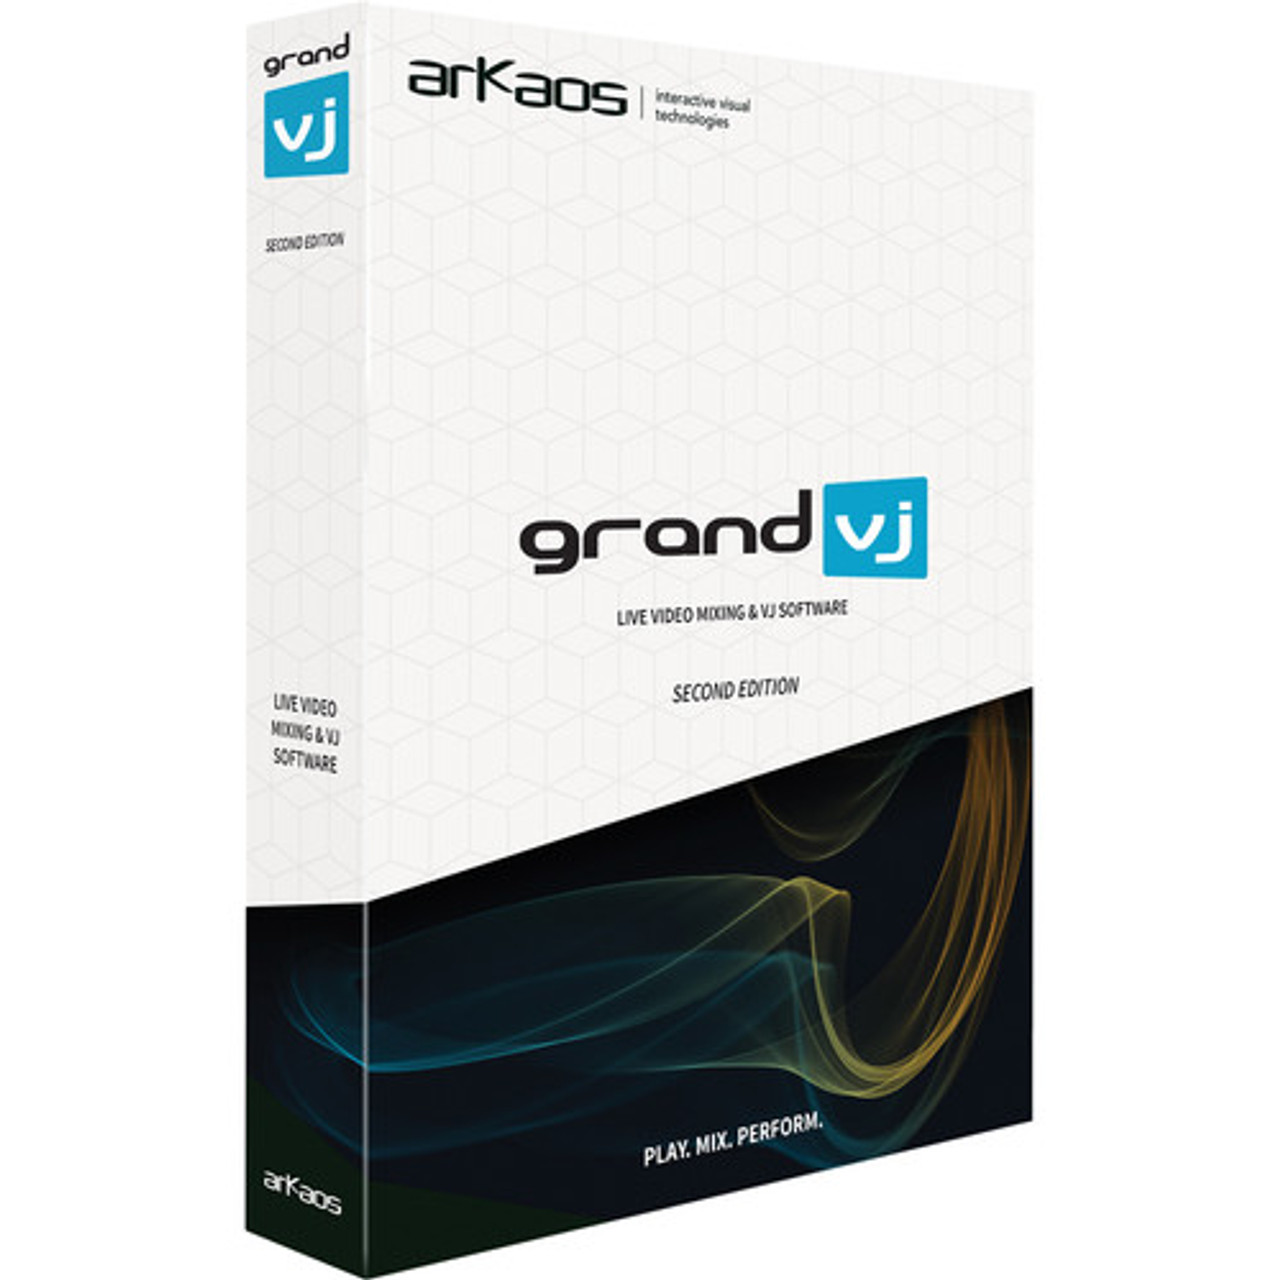 ADJ GRAND VJ 2.0 by Arkaos- Eight Layer Video Mix VJ Software (Version 2.0) (GRA200)